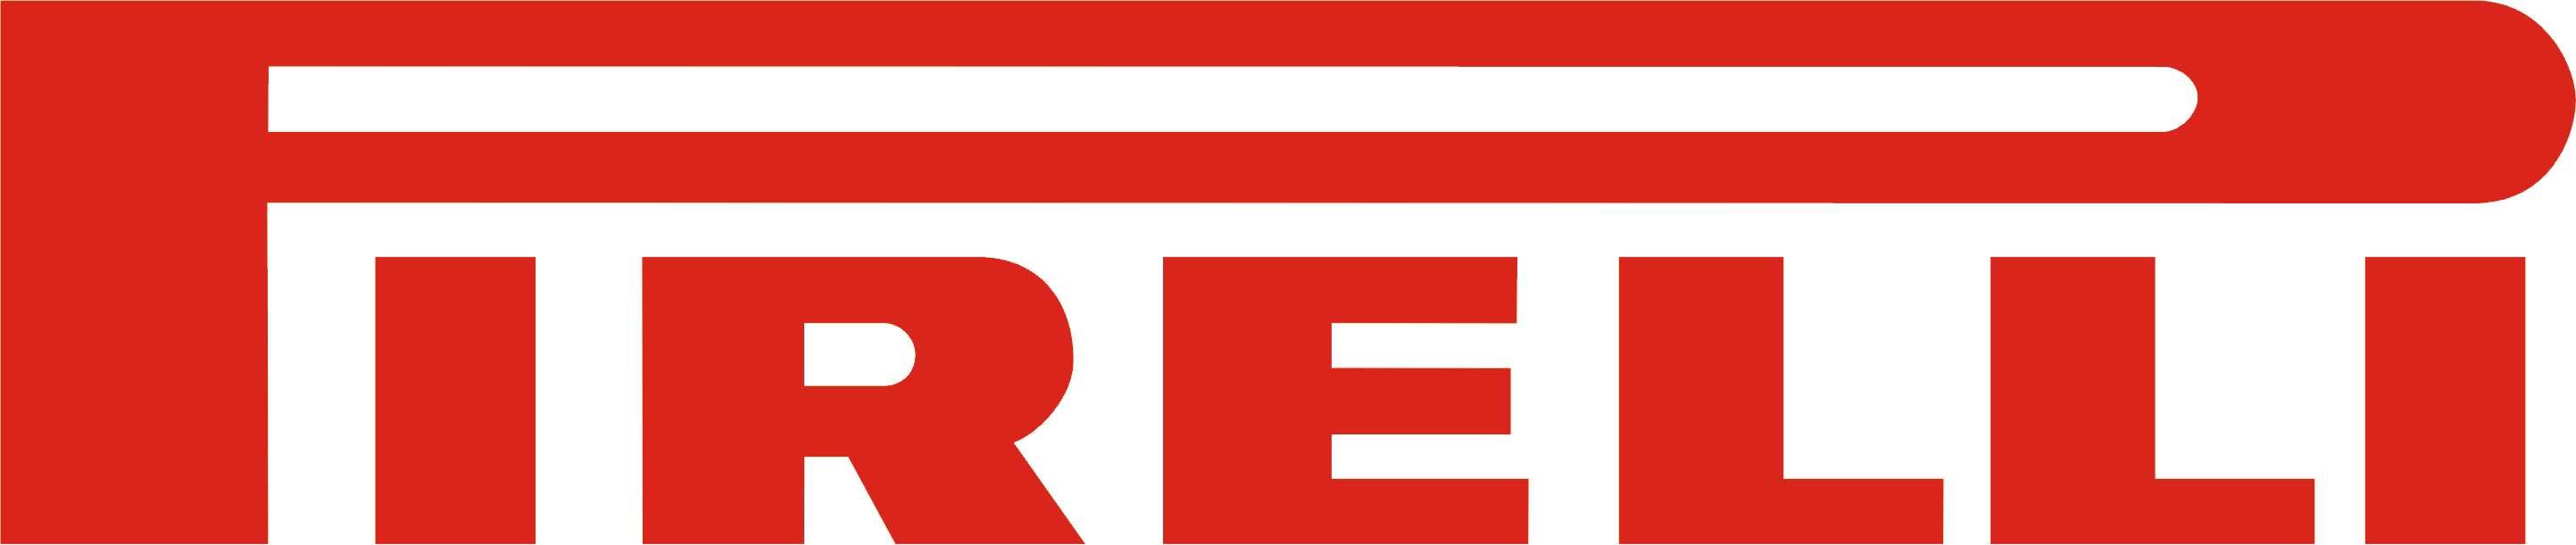 pirelli-tire-logo2